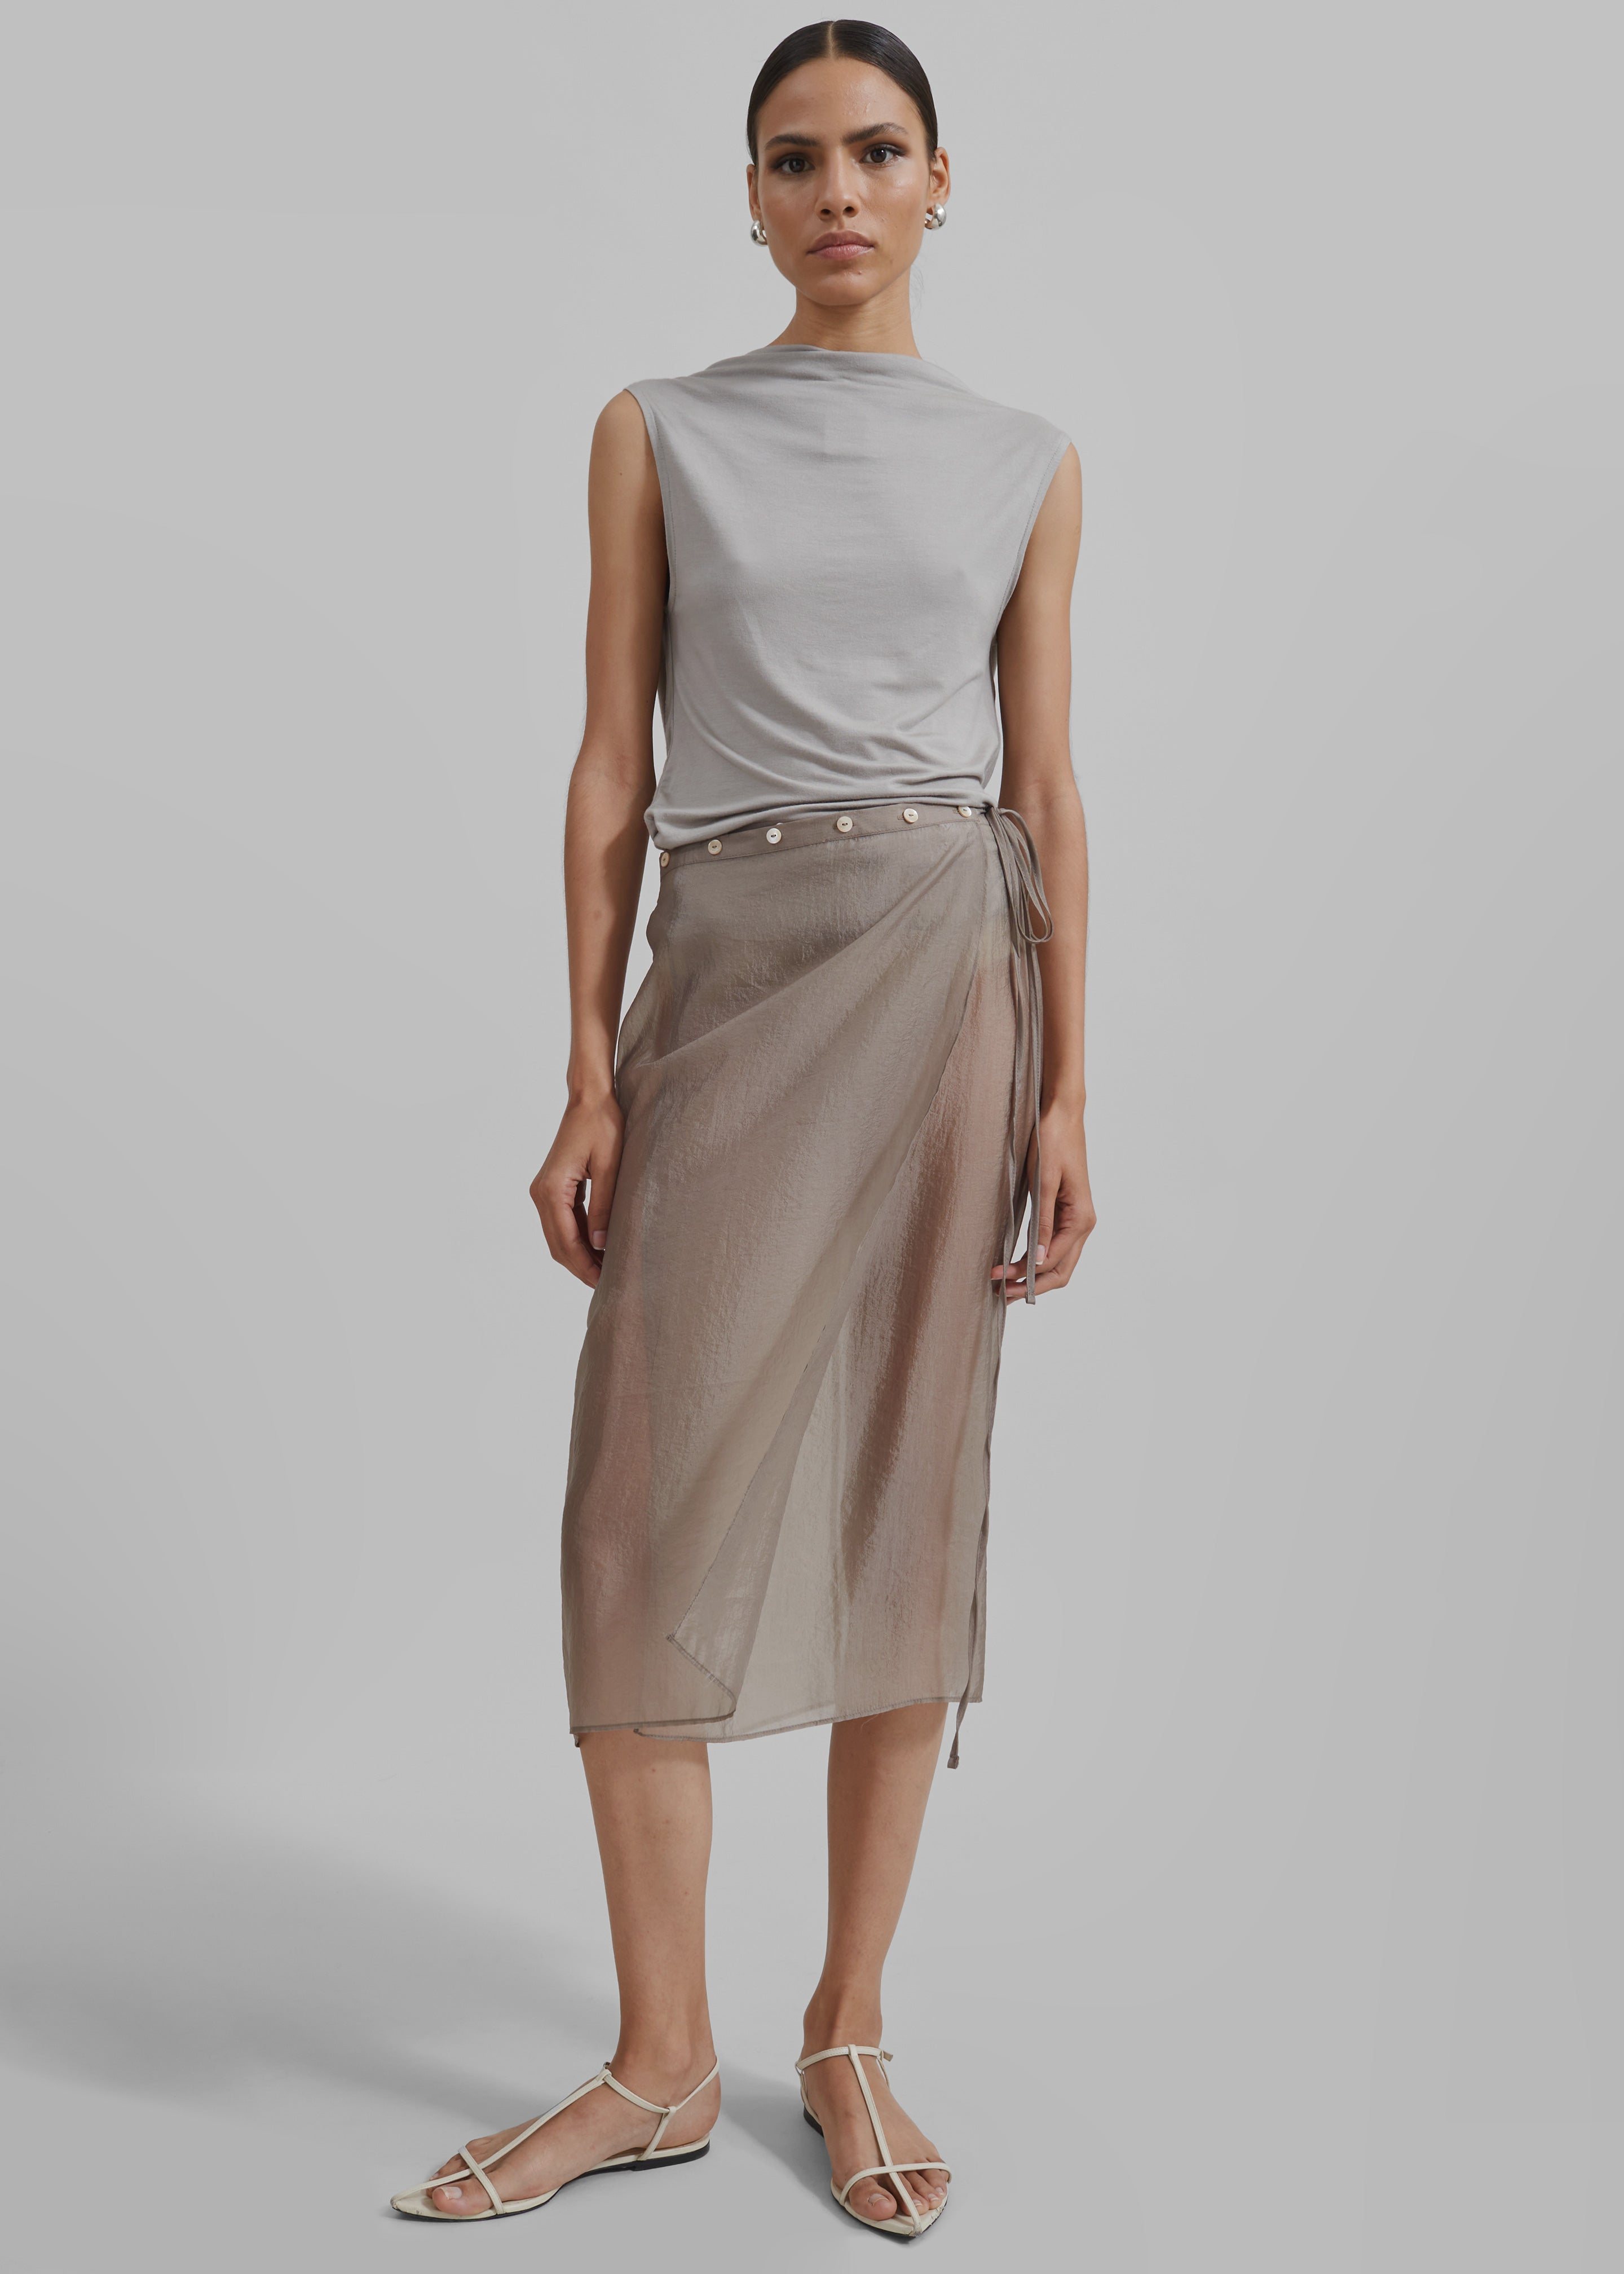 Tia Sheer Layered Skirt - Beige - 1